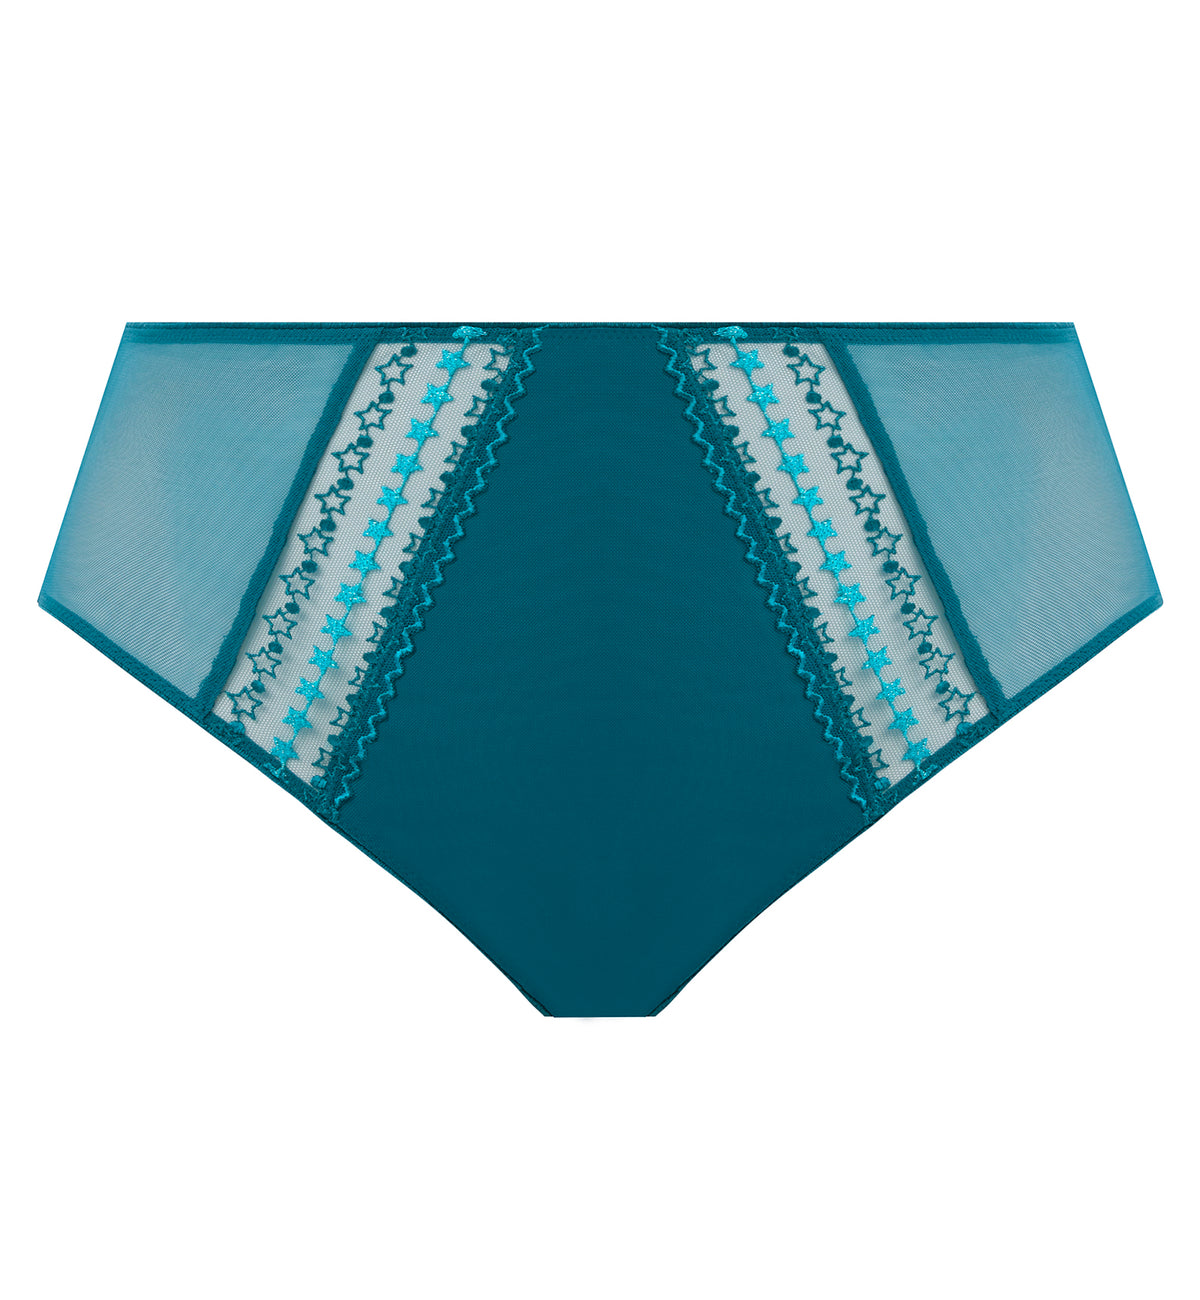 Elomi Matilda Matching Full Panty Brief (8906),XL,Blue Star - Blue Star,XL